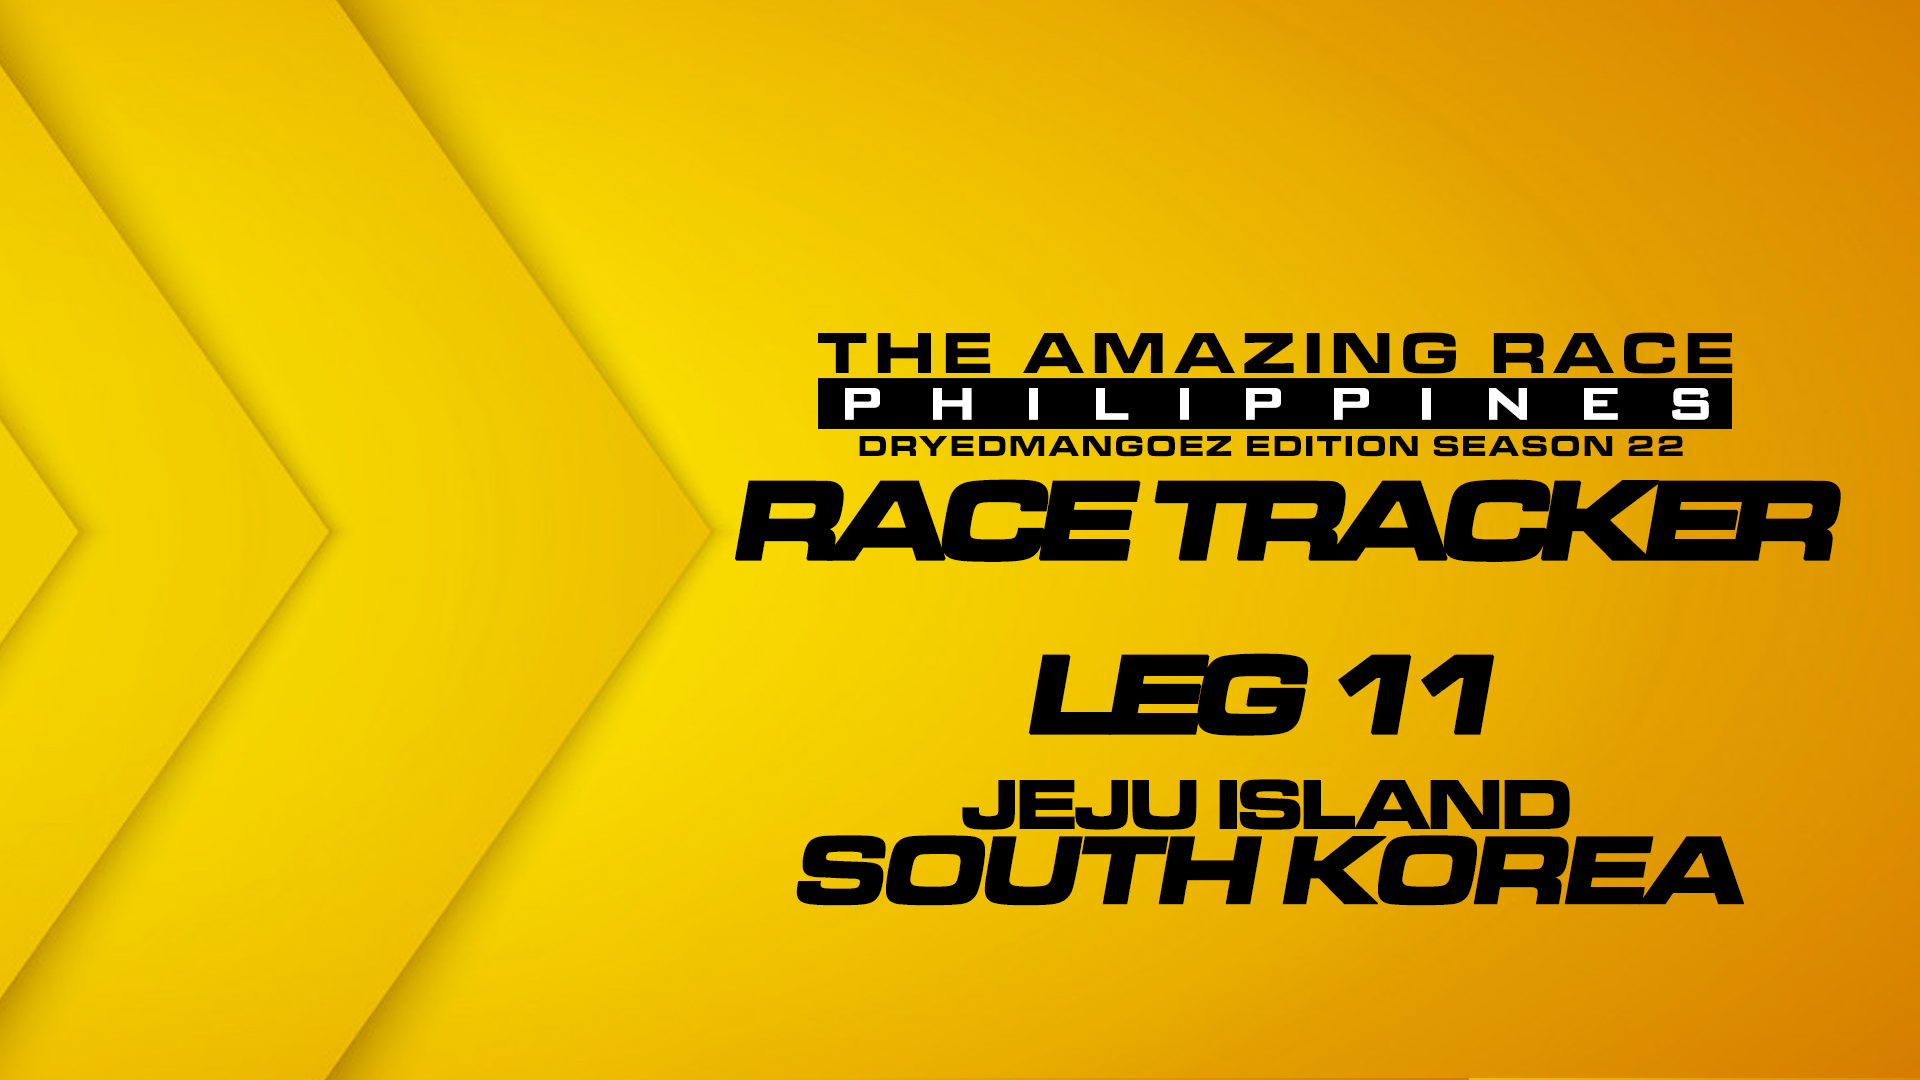 The Amazing Race Philippines: DryedMangoez Edition Season 22 Race Tracker – Leg 11